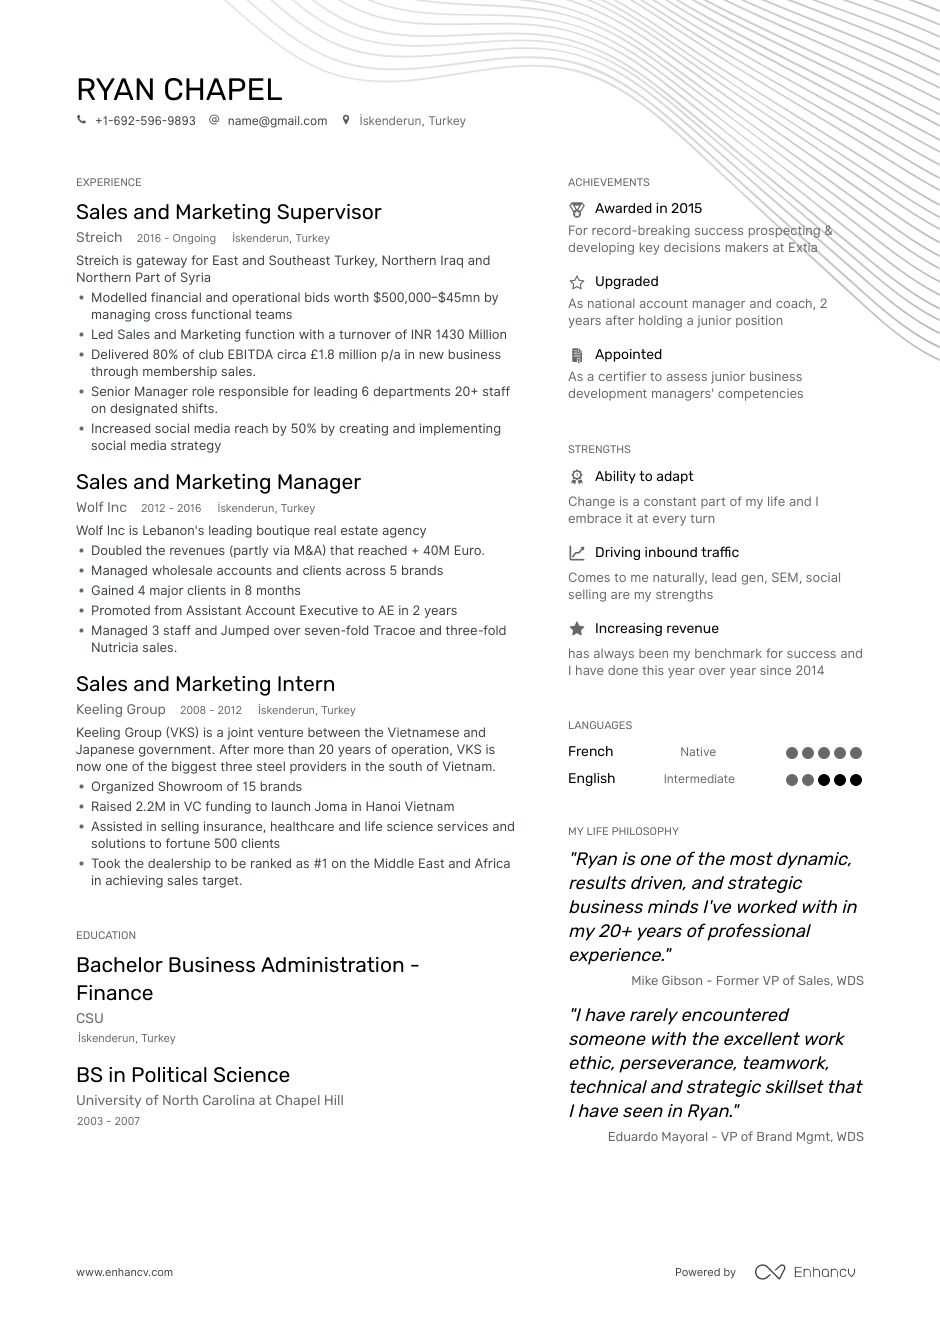 Sample Resume for Sales and Marketing Job Job-winning Sales and Marketing Professional Resume Examples …